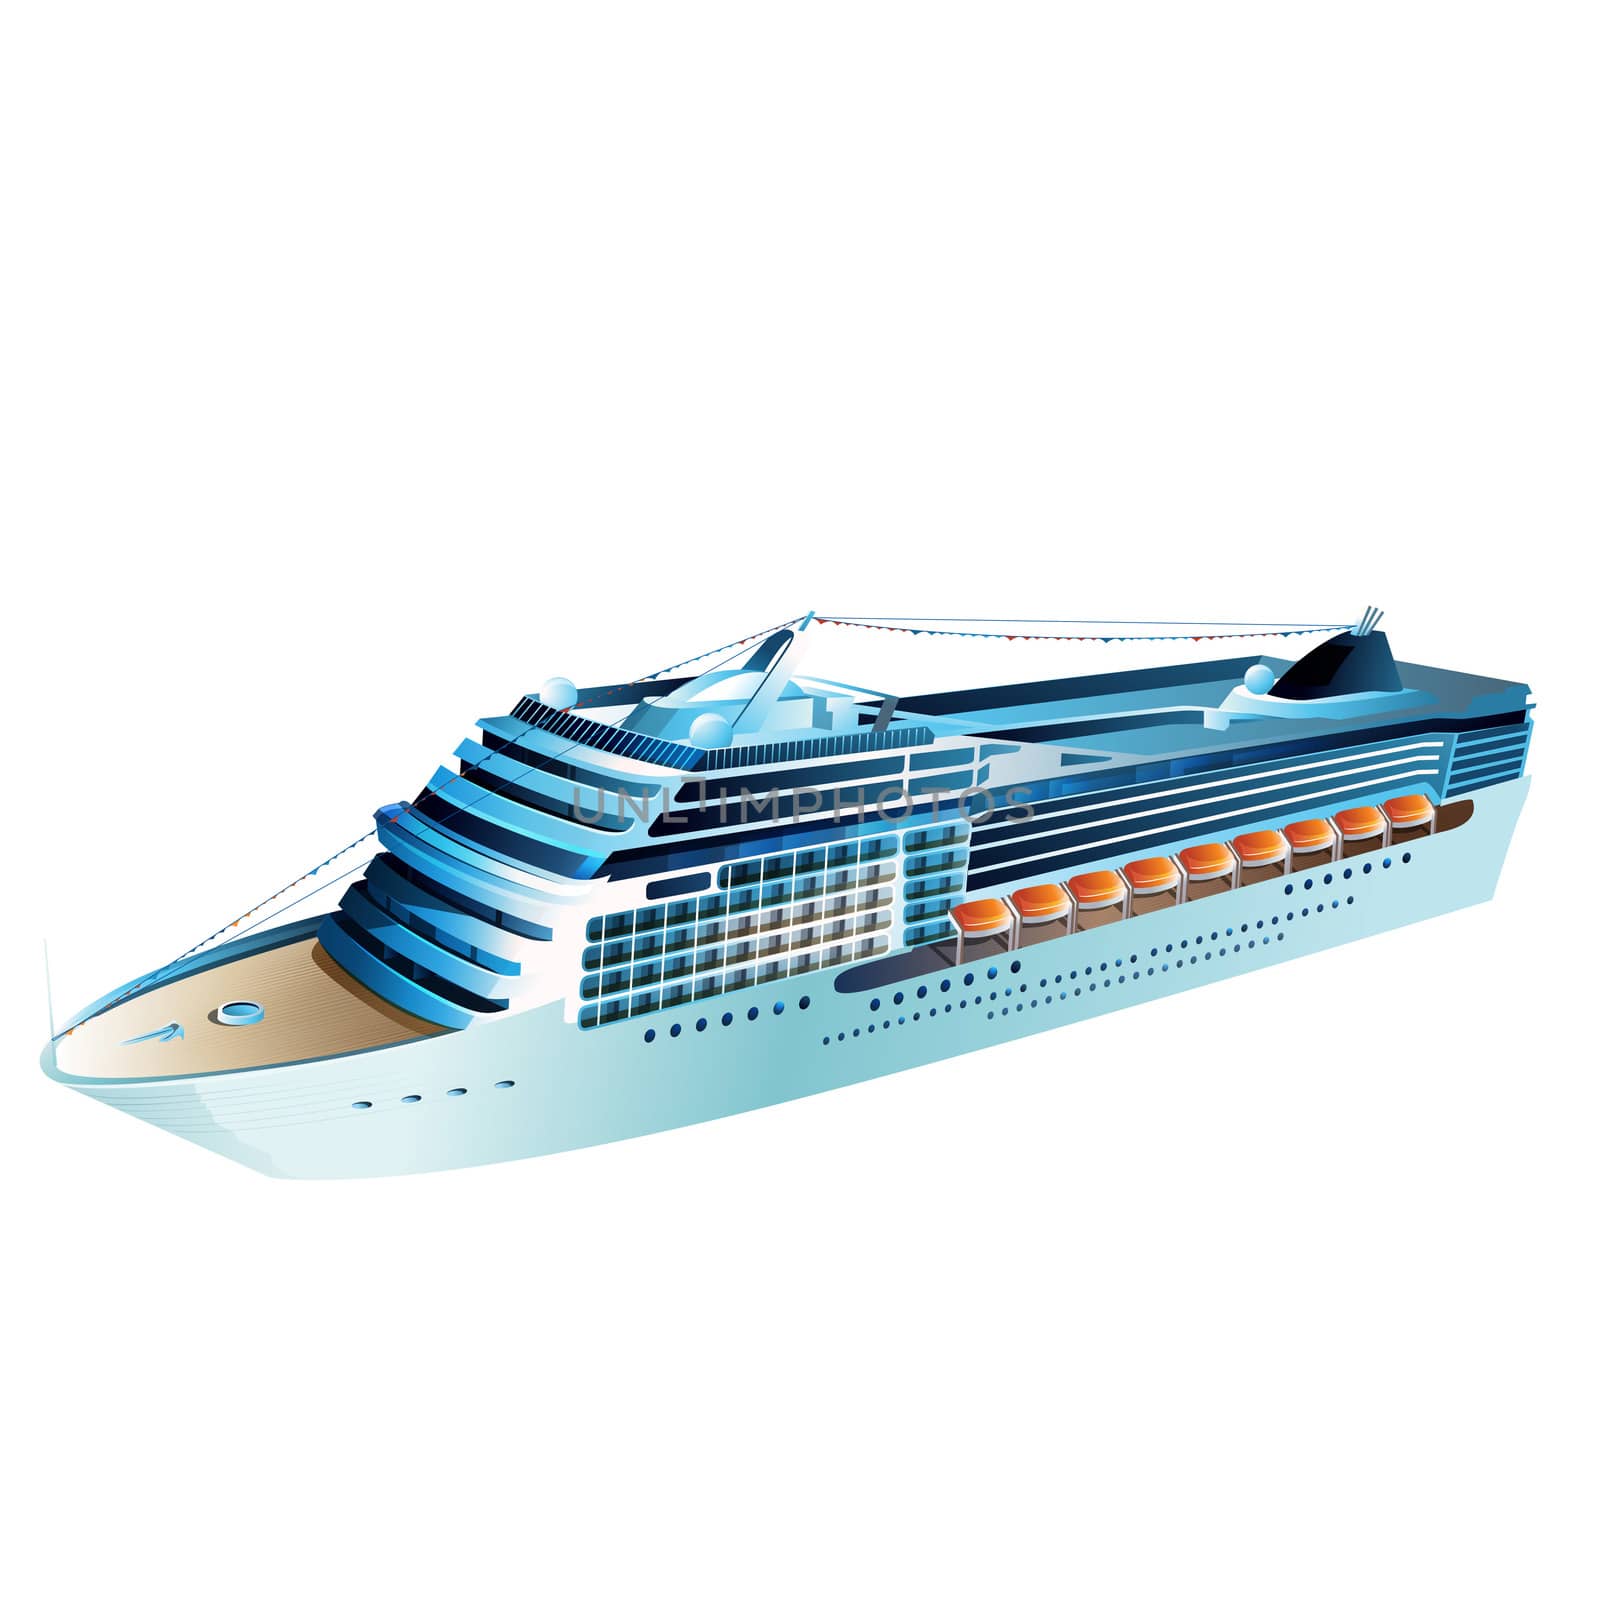 Cruise liner  illustration on a white background